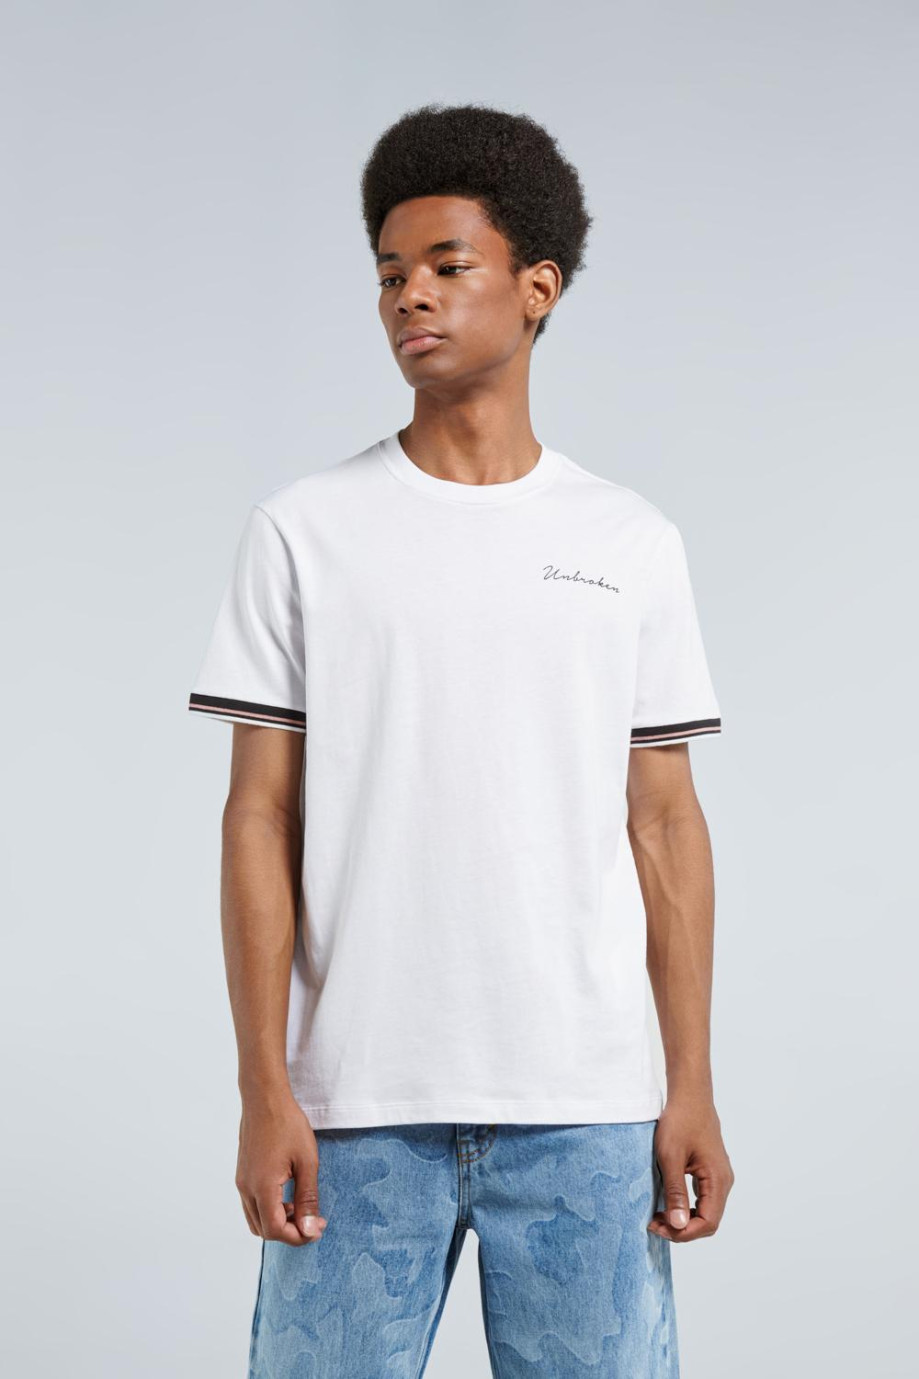 Camiseta manga corta blanca con puños tejidos y texto